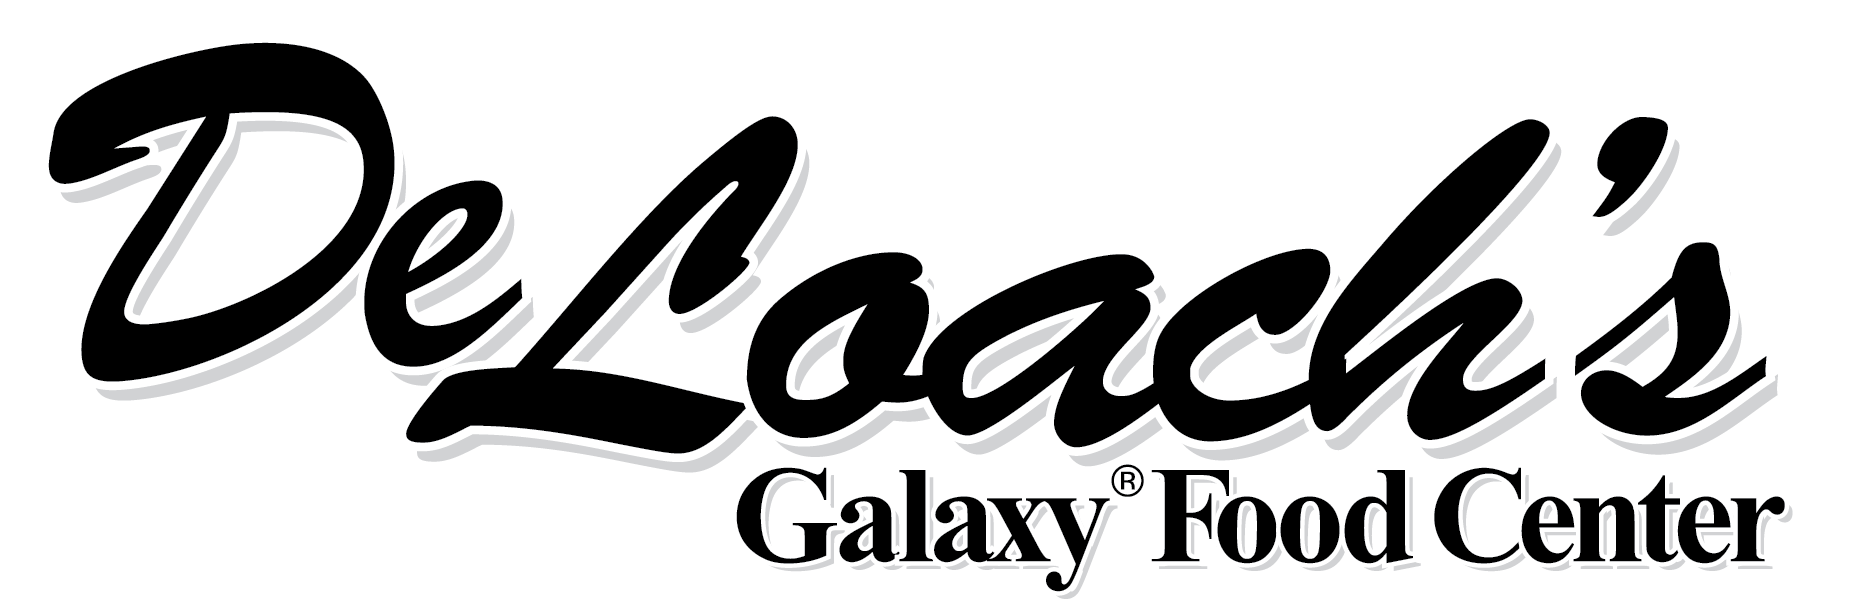 A theme logo of Deloach Galaxy